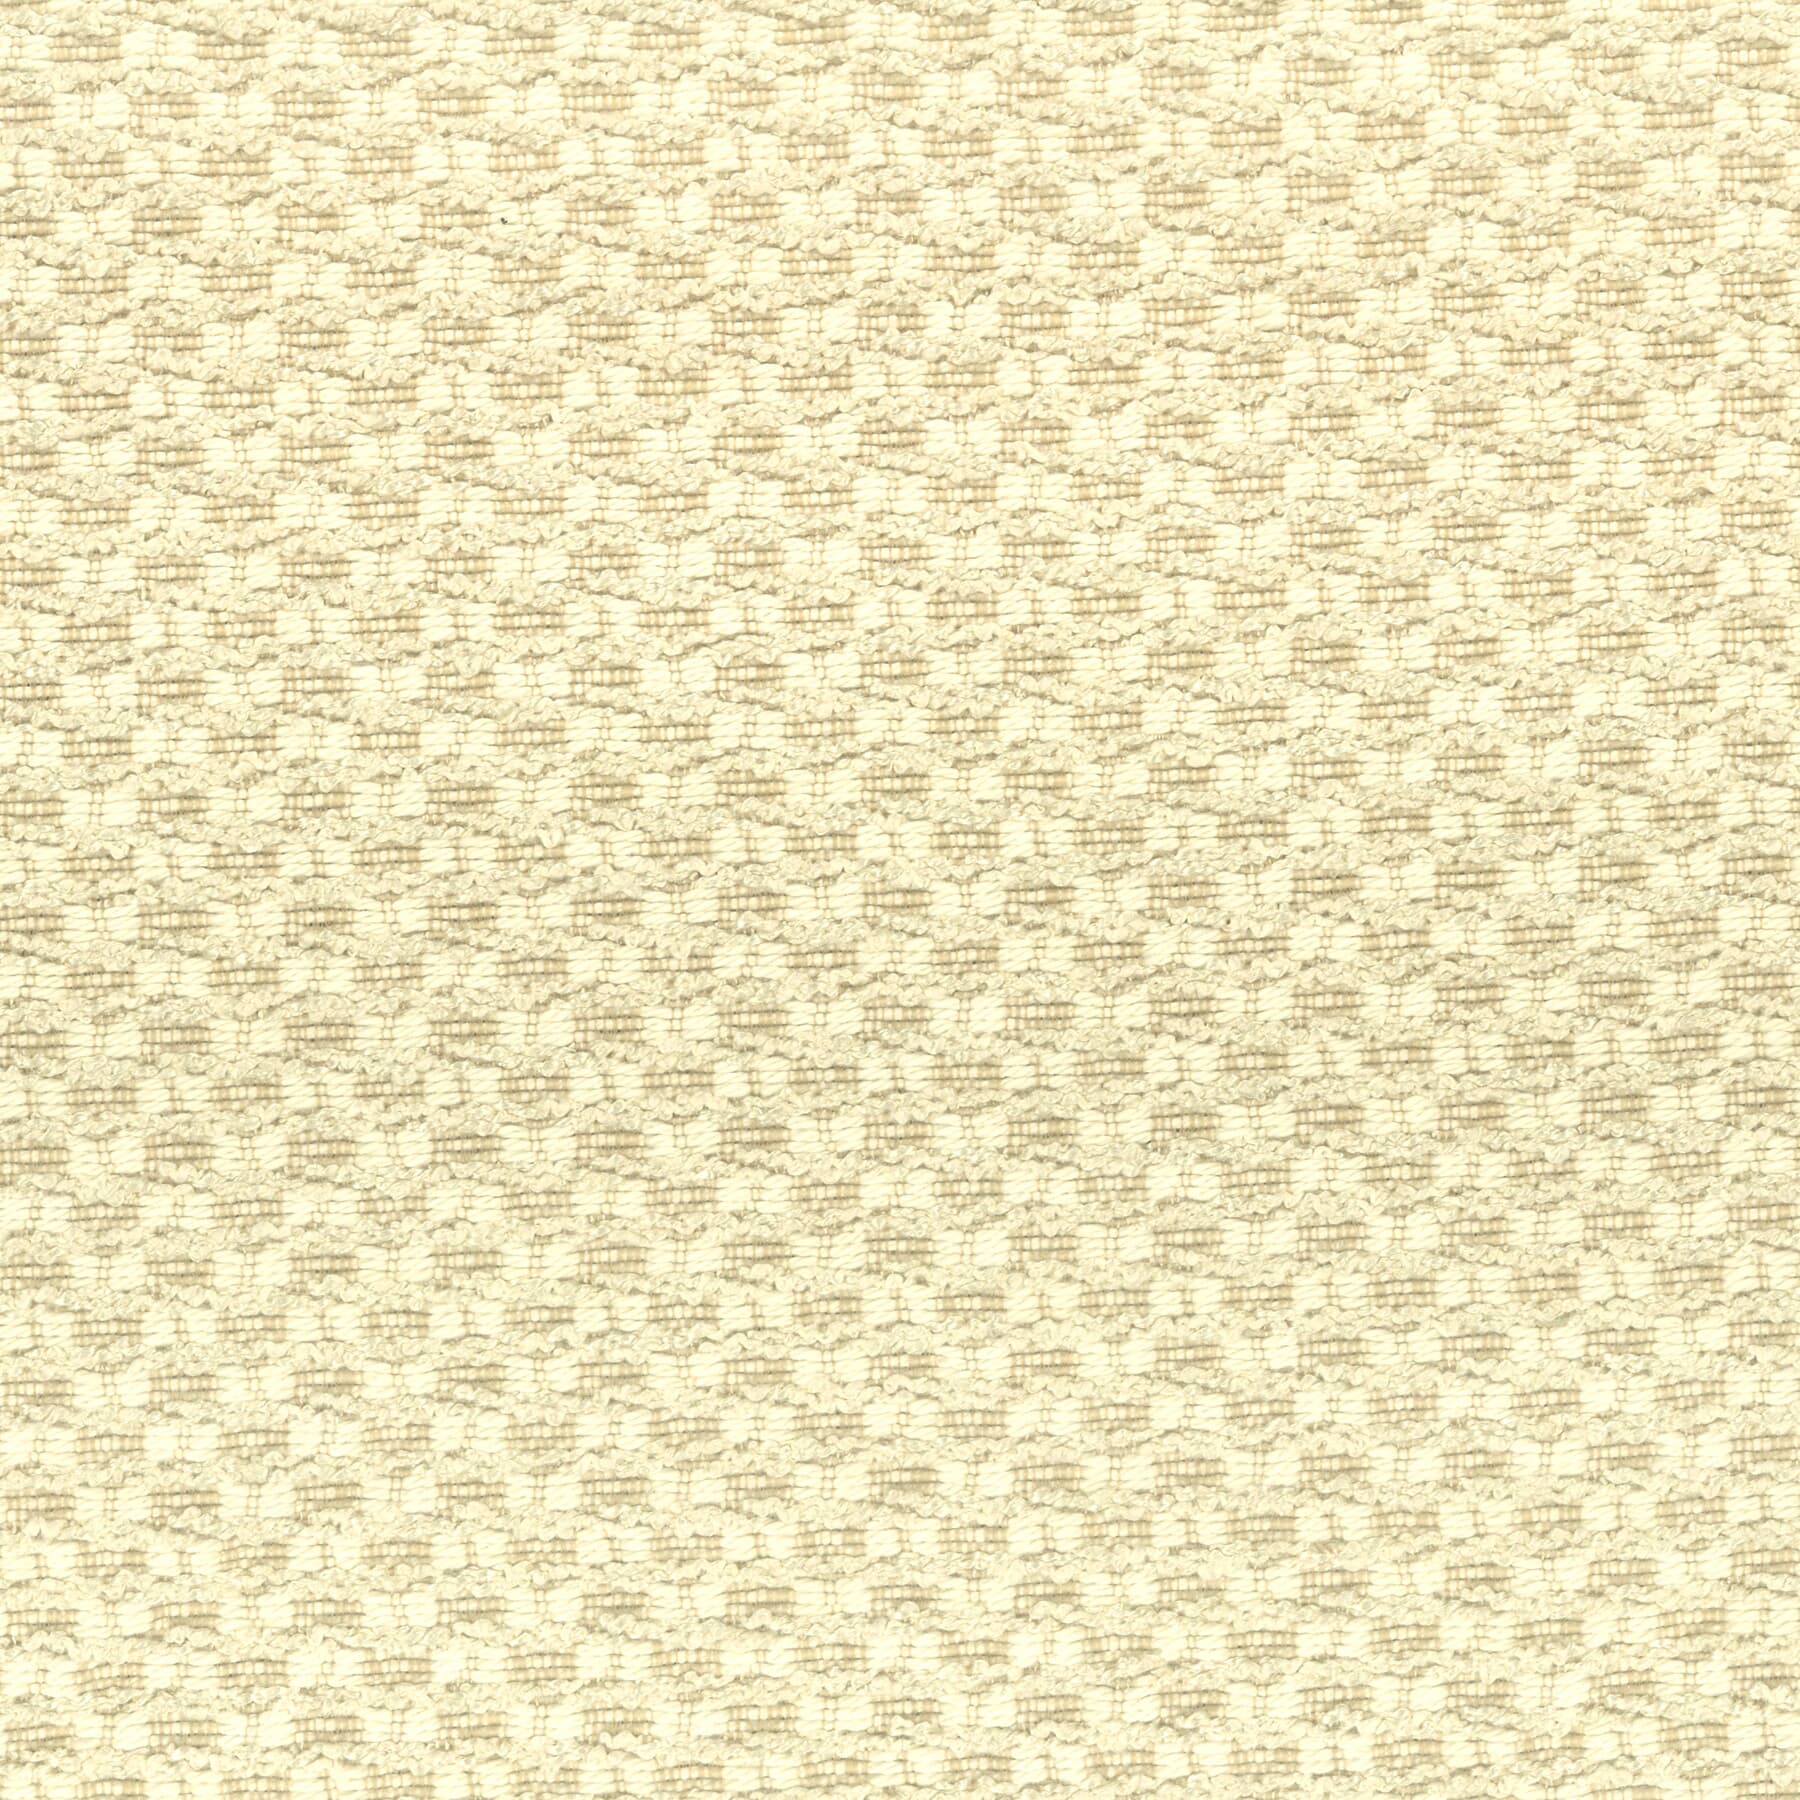 7716-2 Sisal Plain by Stout Fabric